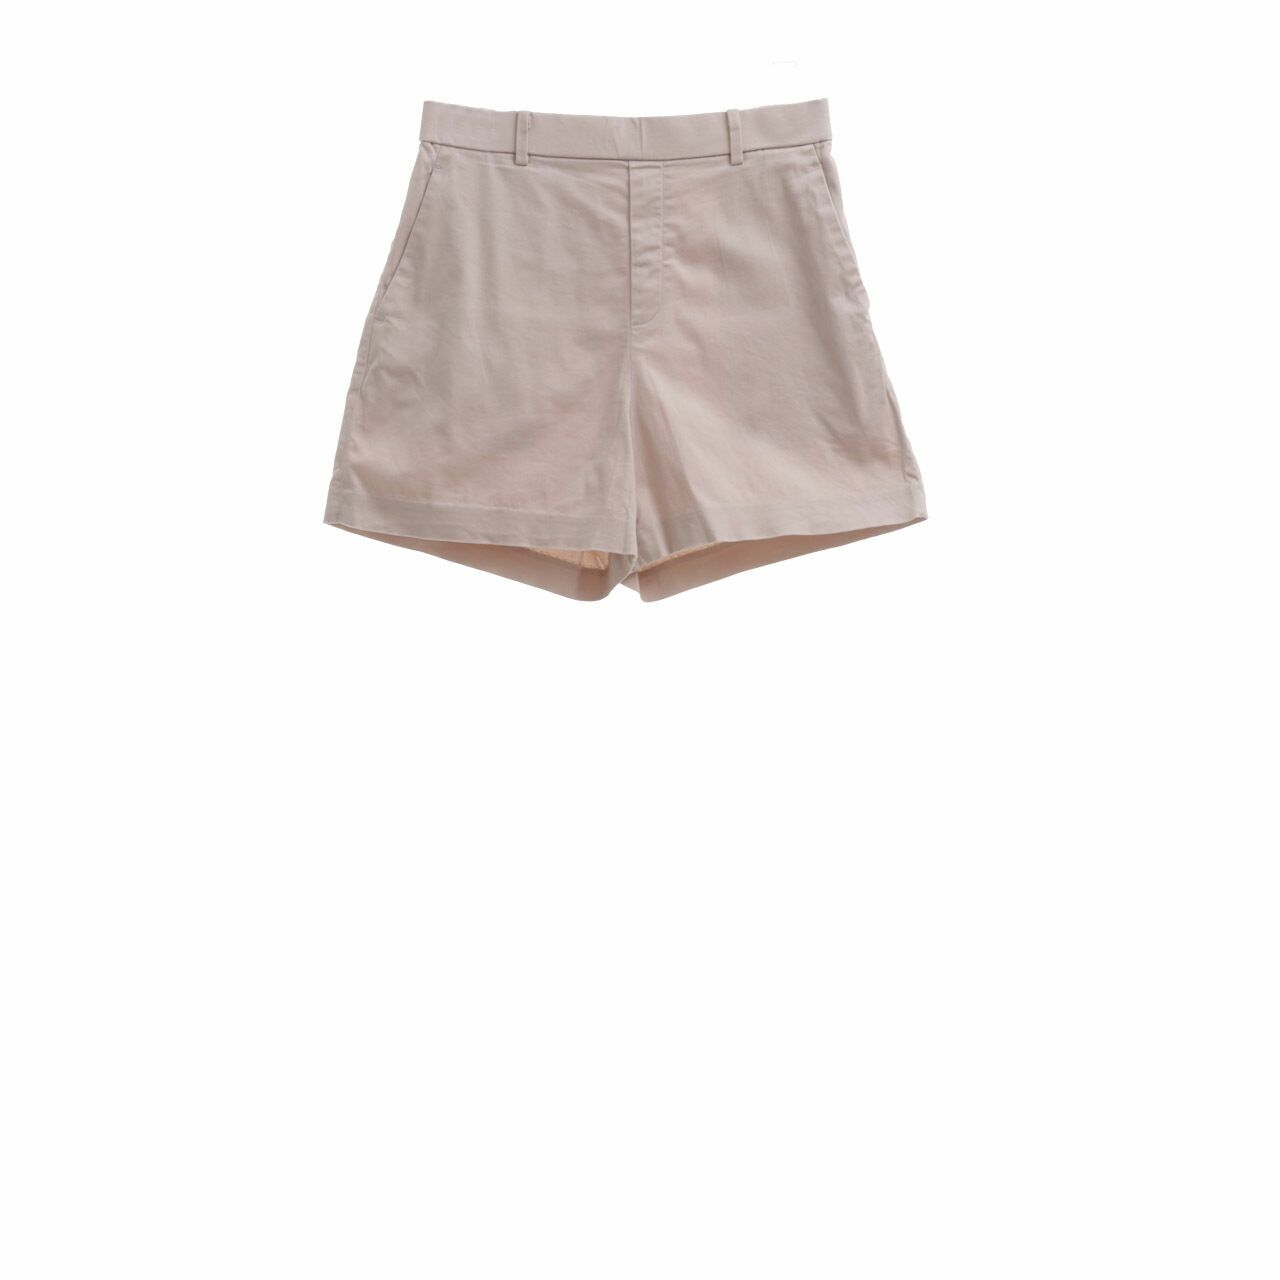 UNIQLO Cream Shorts Pants